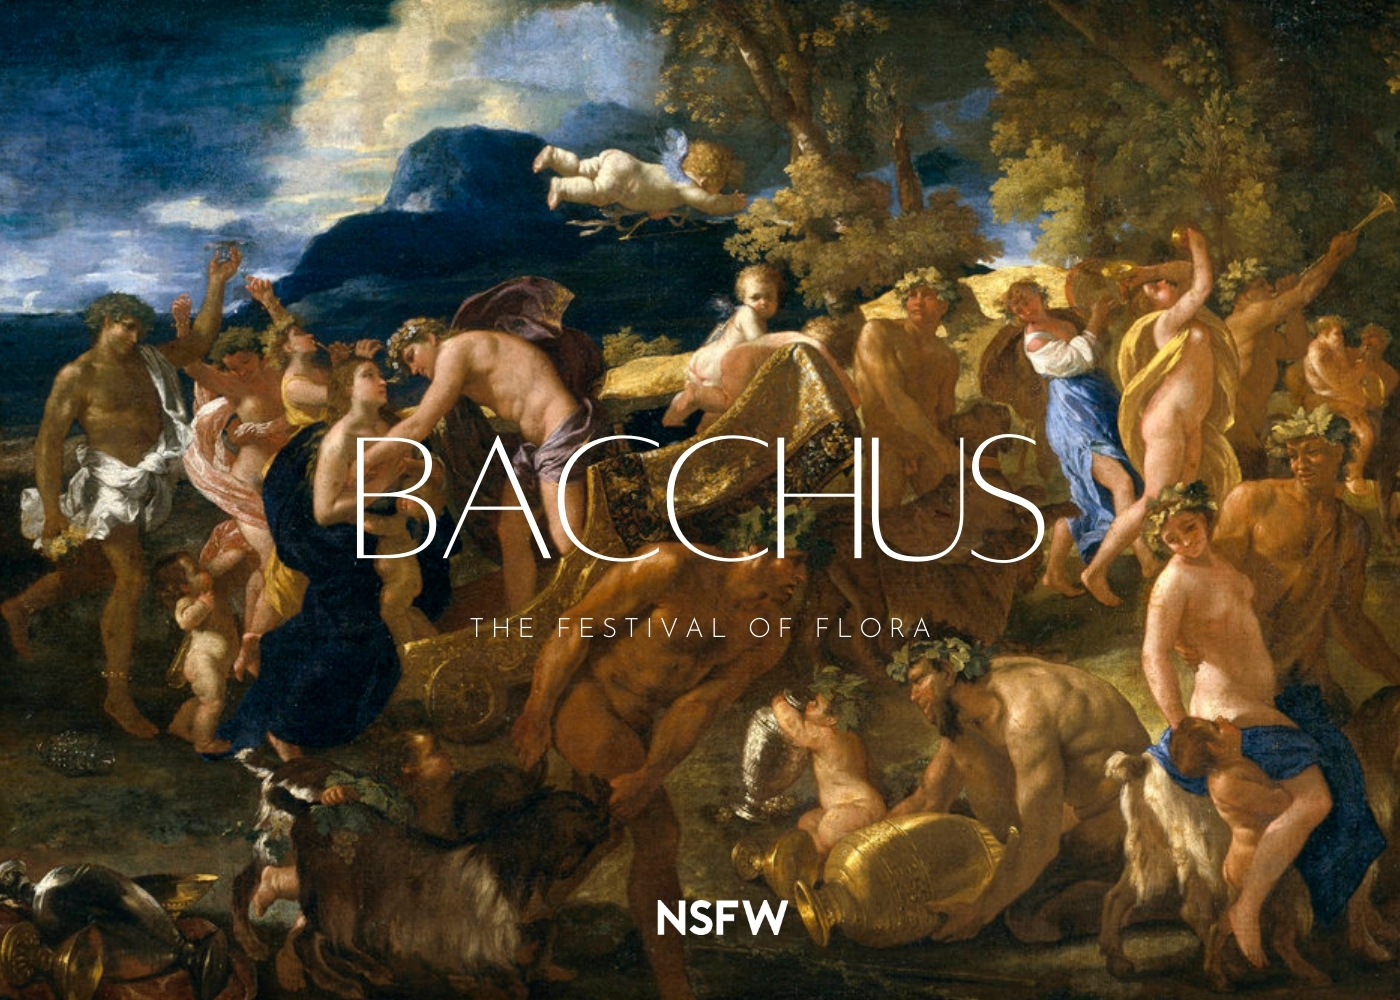 Bacchus: The Festival of Flora